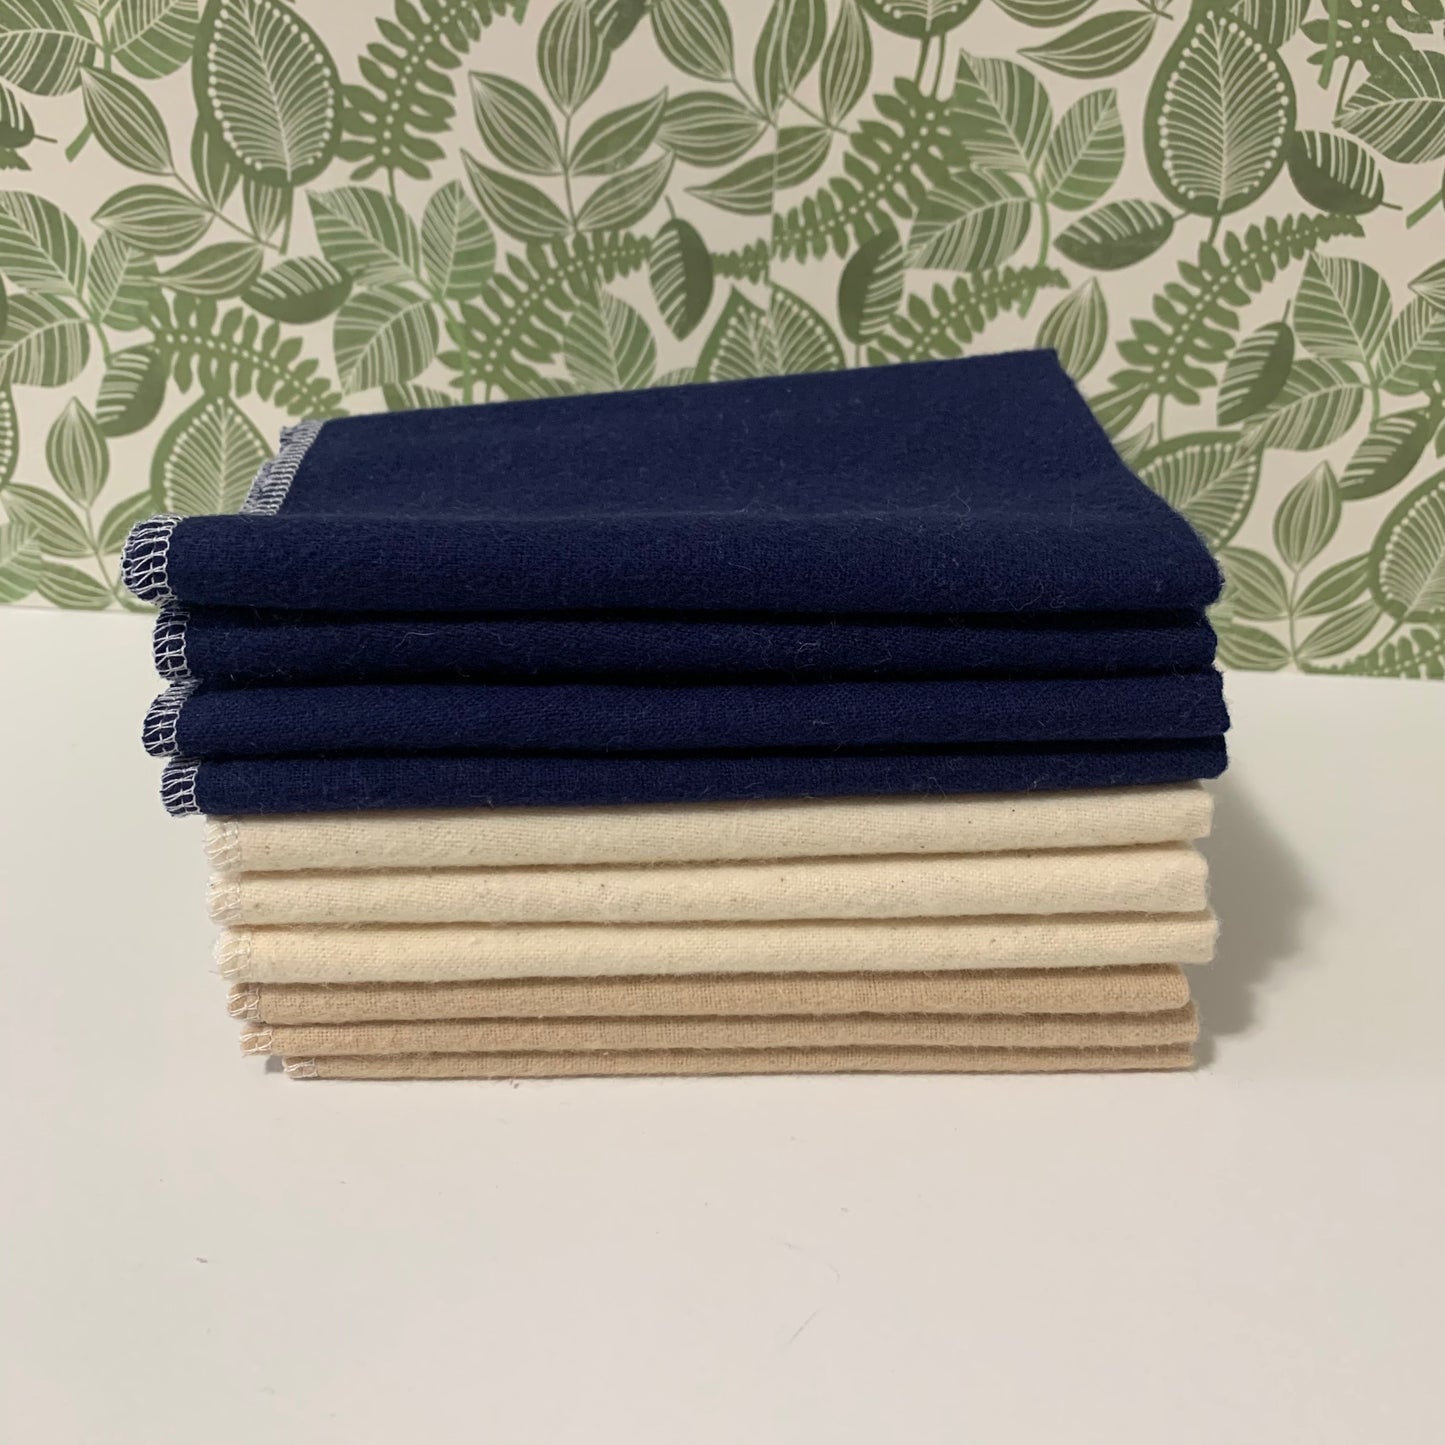 Cloth Napkins - Assorted Patterns SALE